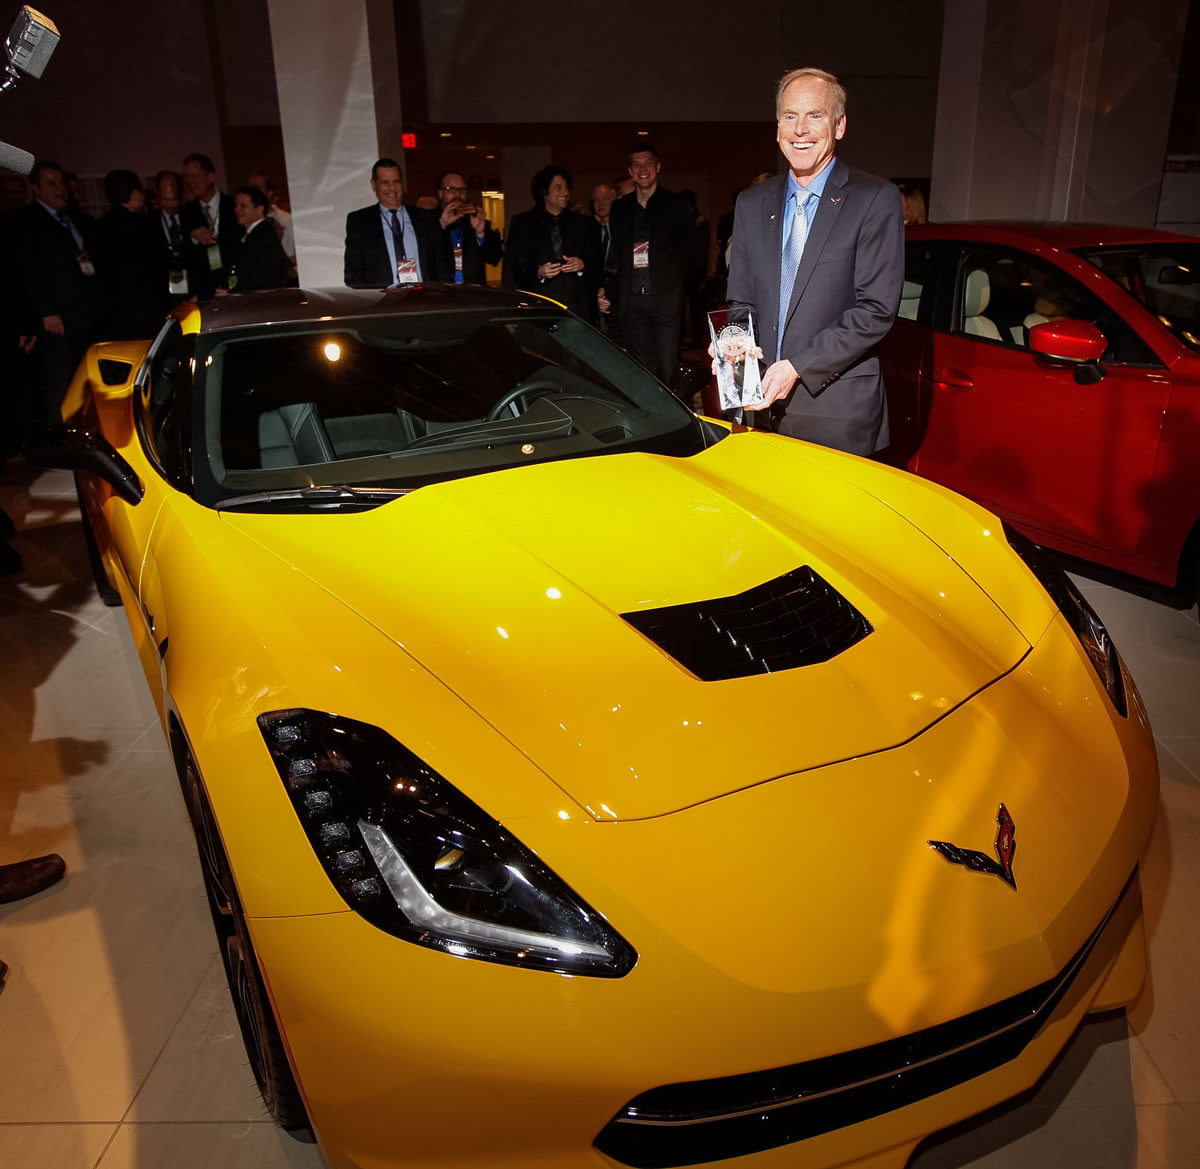 2014 C7 Corvette Stingray Wins North American Car of the Year Award